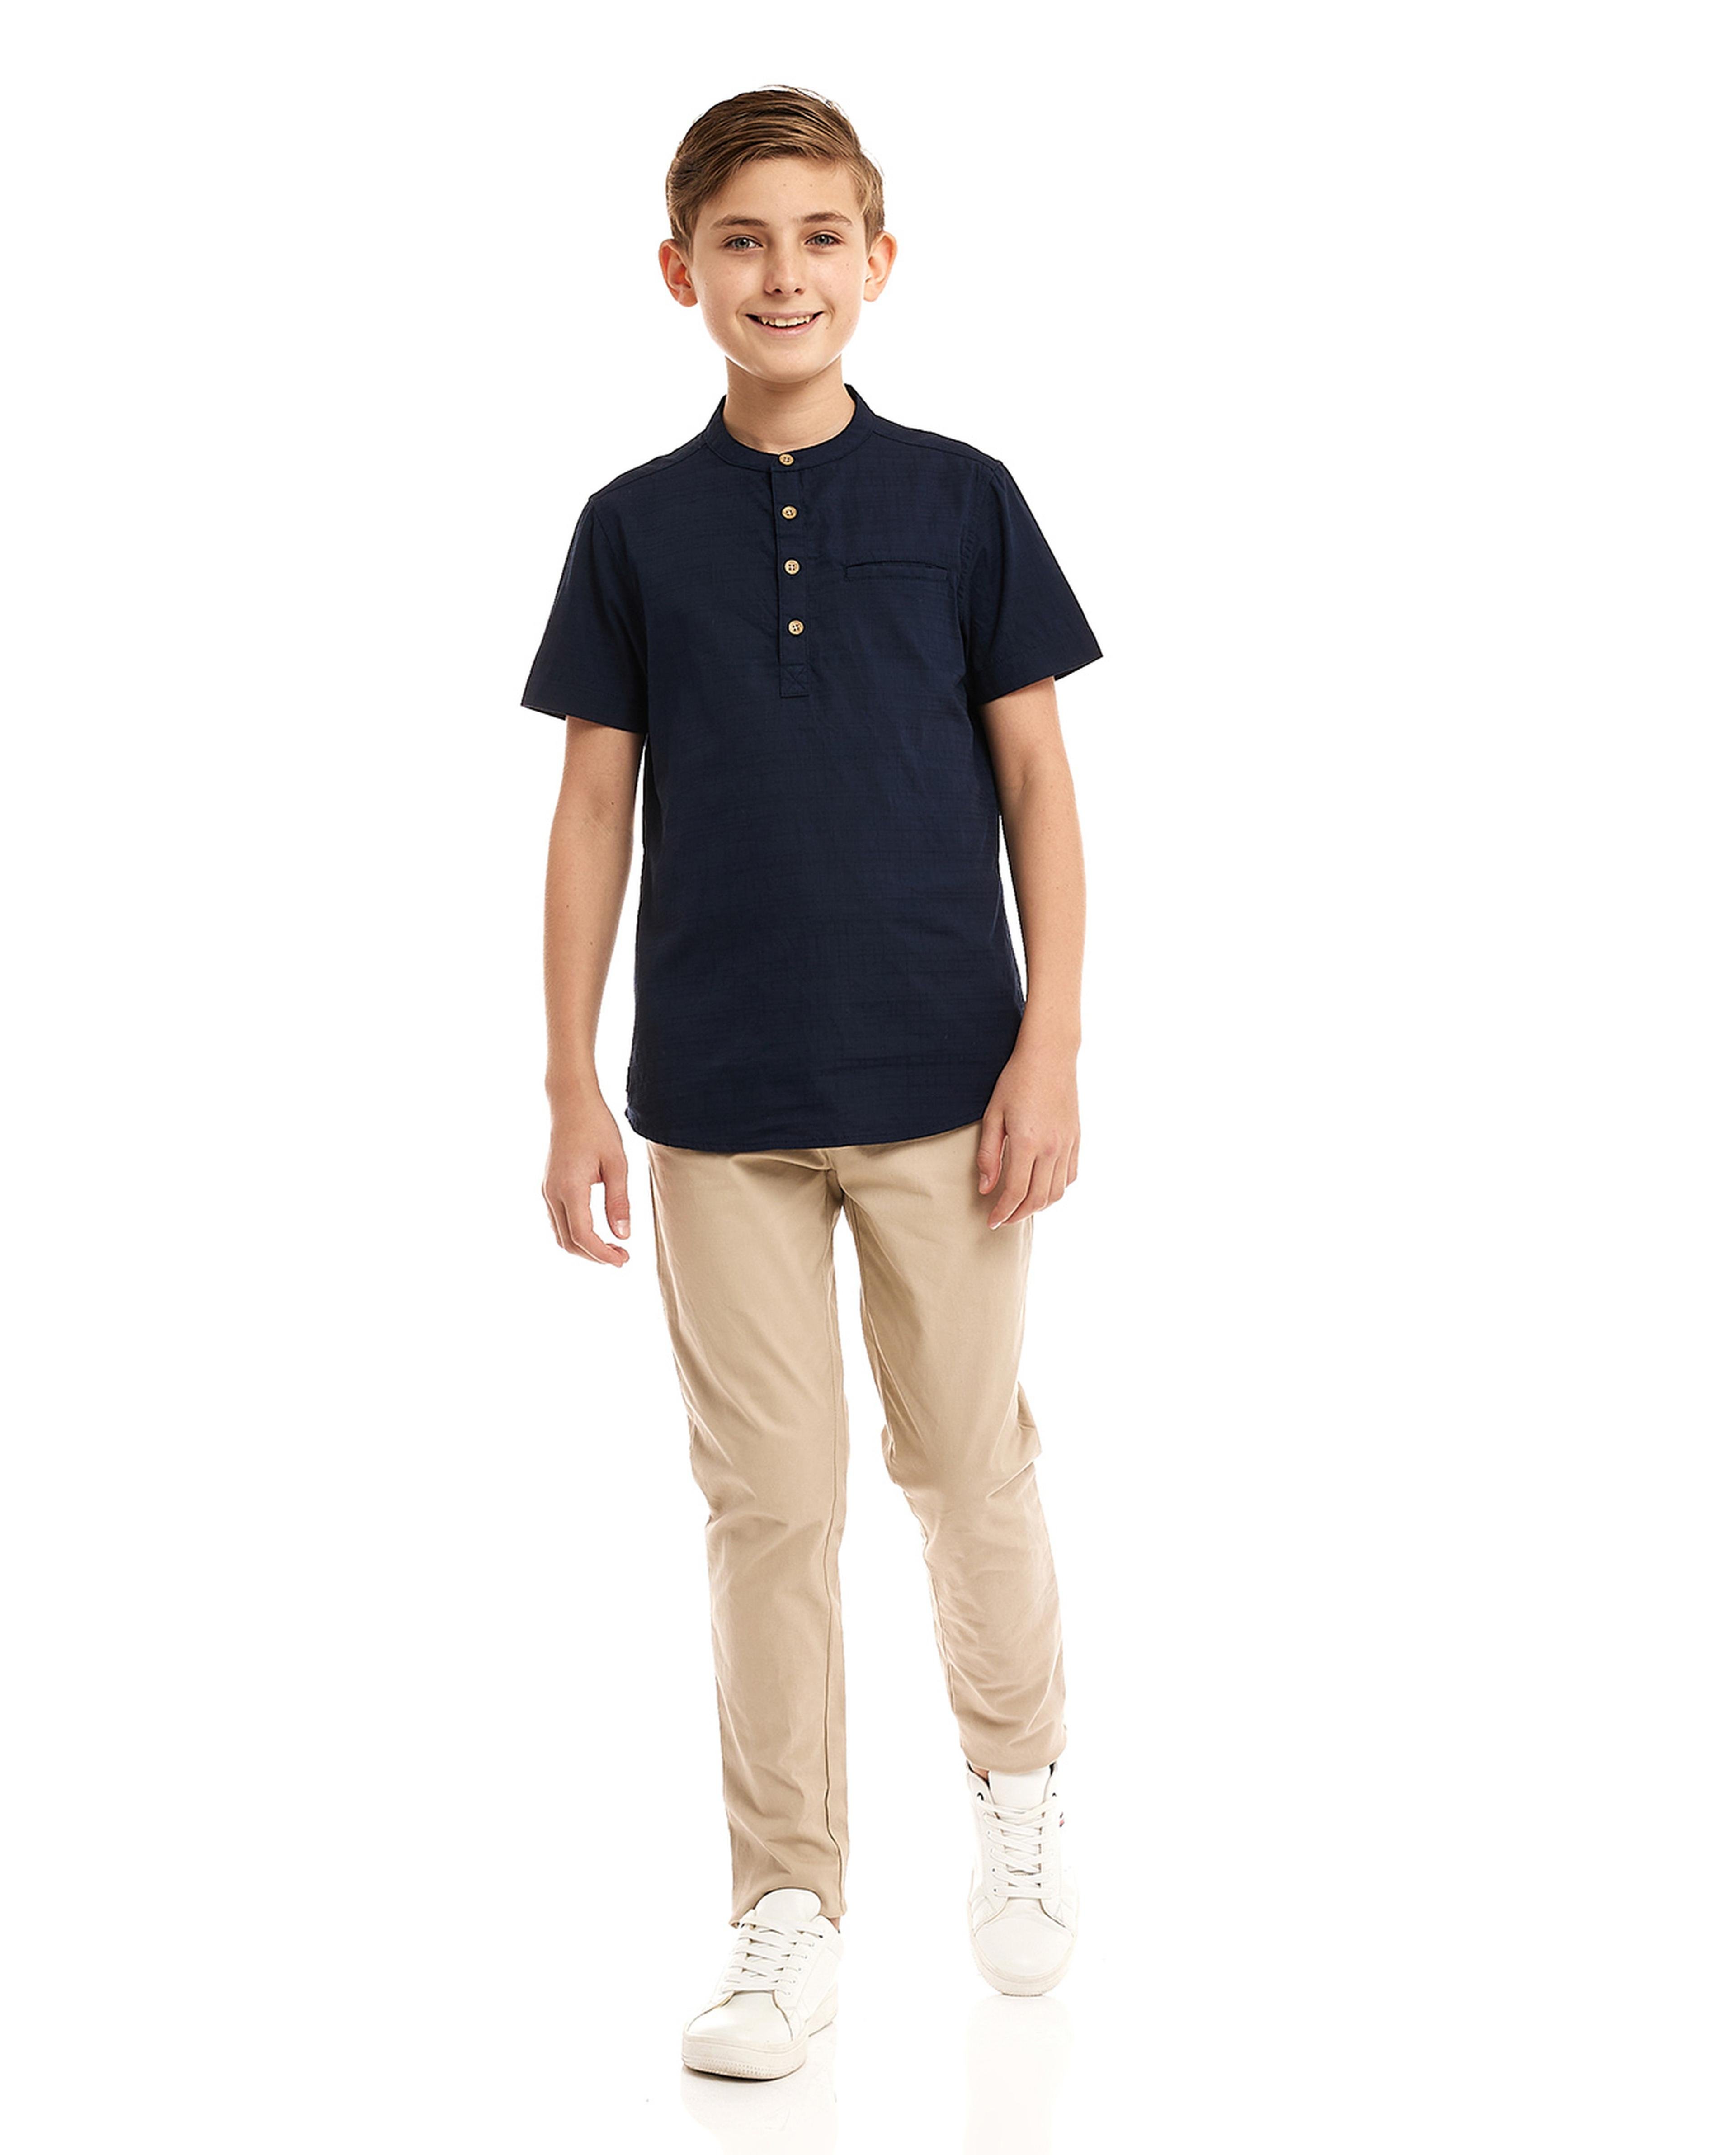 Solid Shirt with Mandarin Collar and Short Sleeves